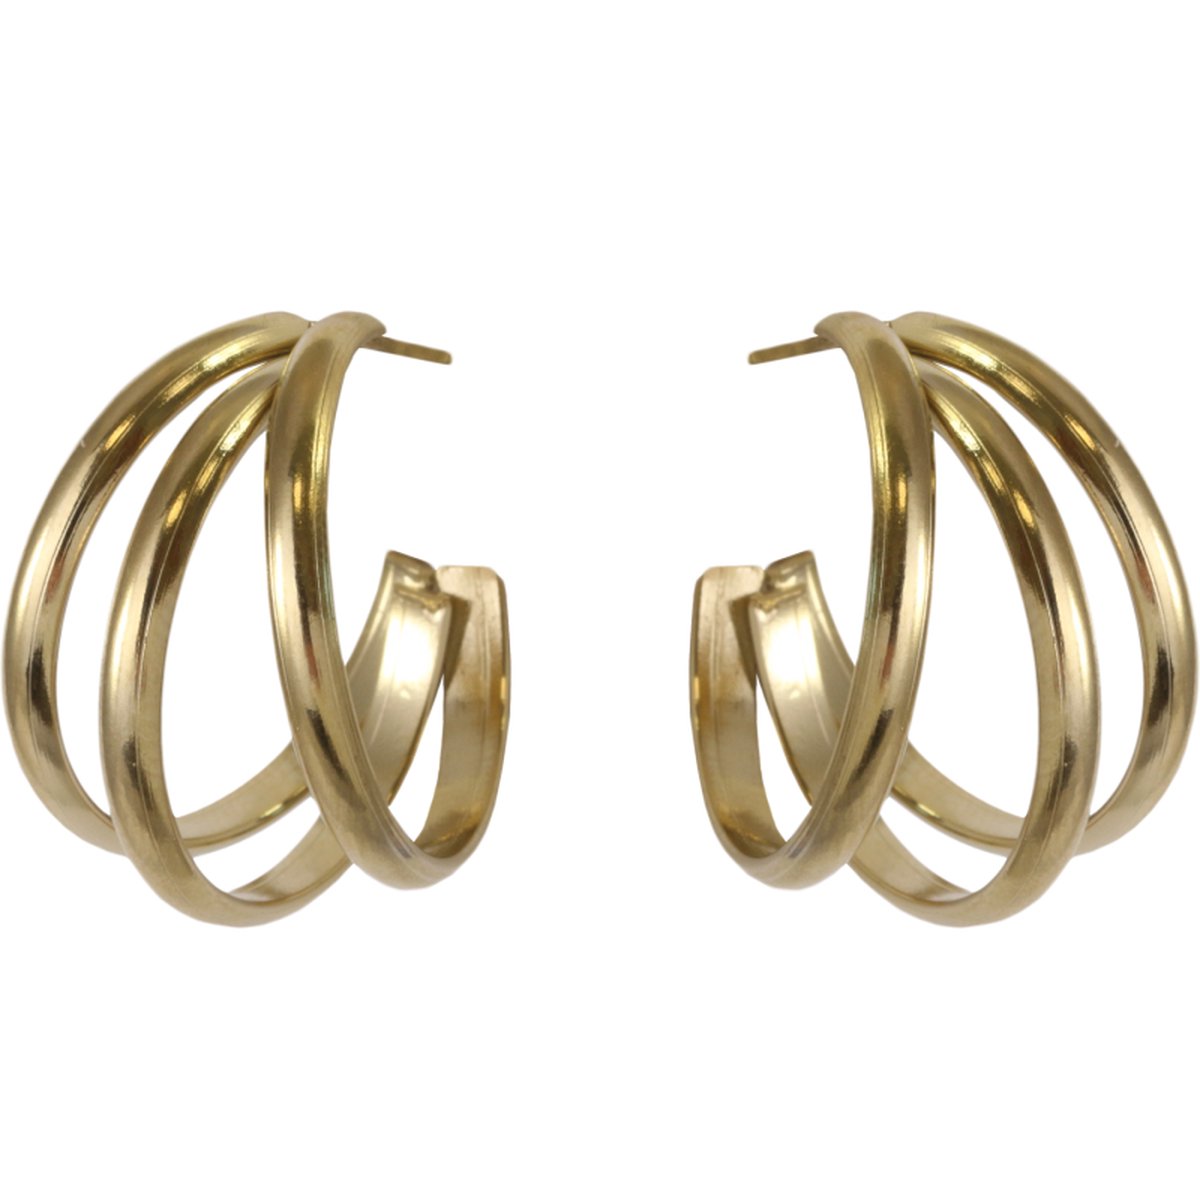 Goudkleurige oorbellen met driedubbele ring - Roestvrij staal - Verguld met 14 karaat goud